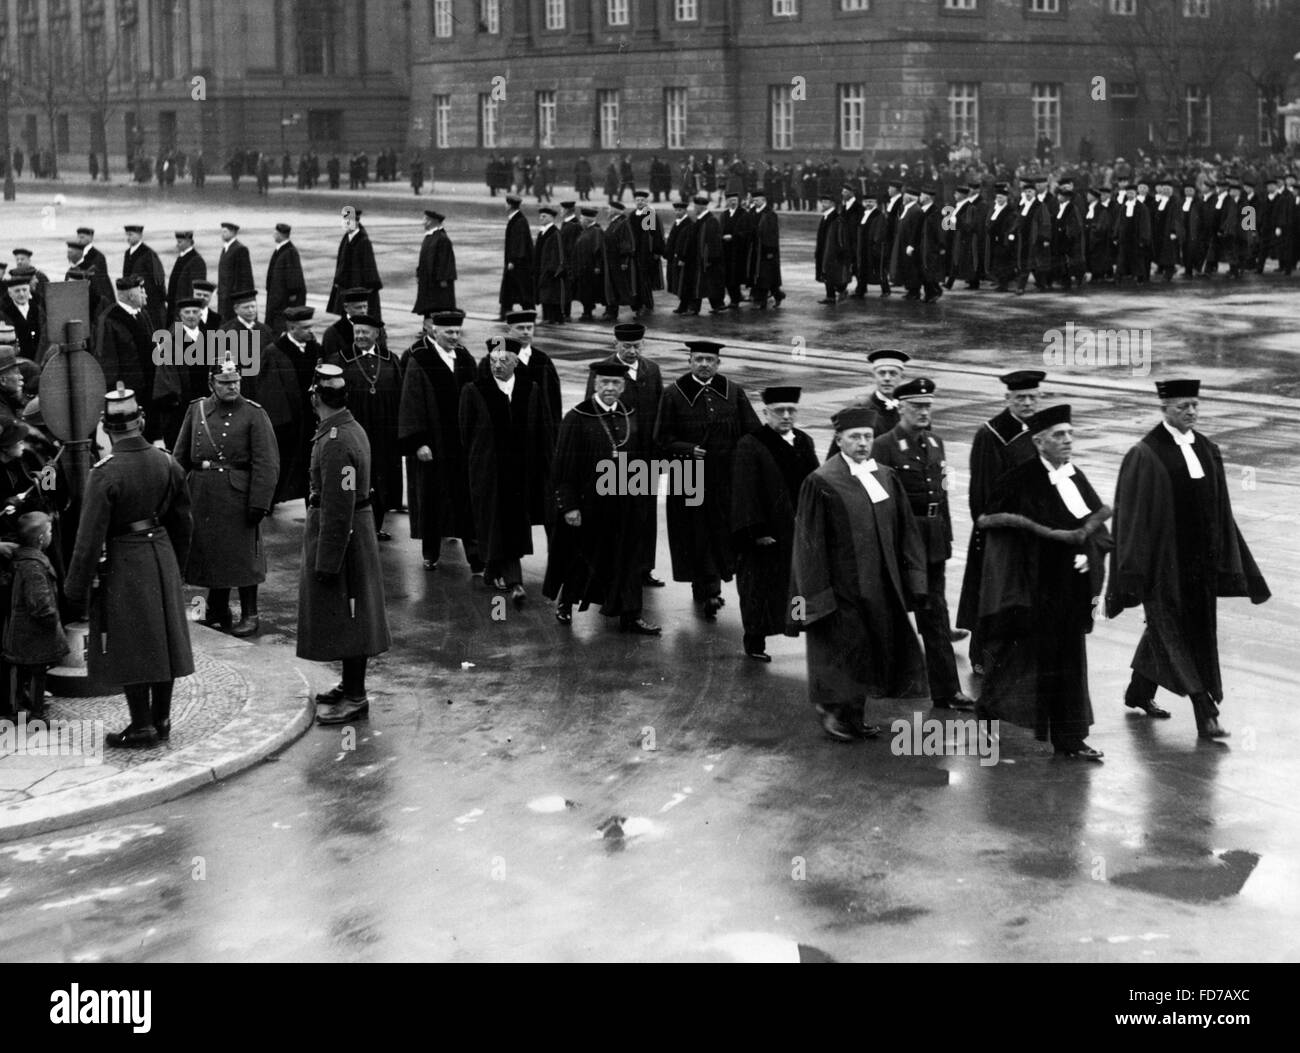 State ceremony at Kaiser-Franz-Joseph-Platz, 1935 Stock Photo